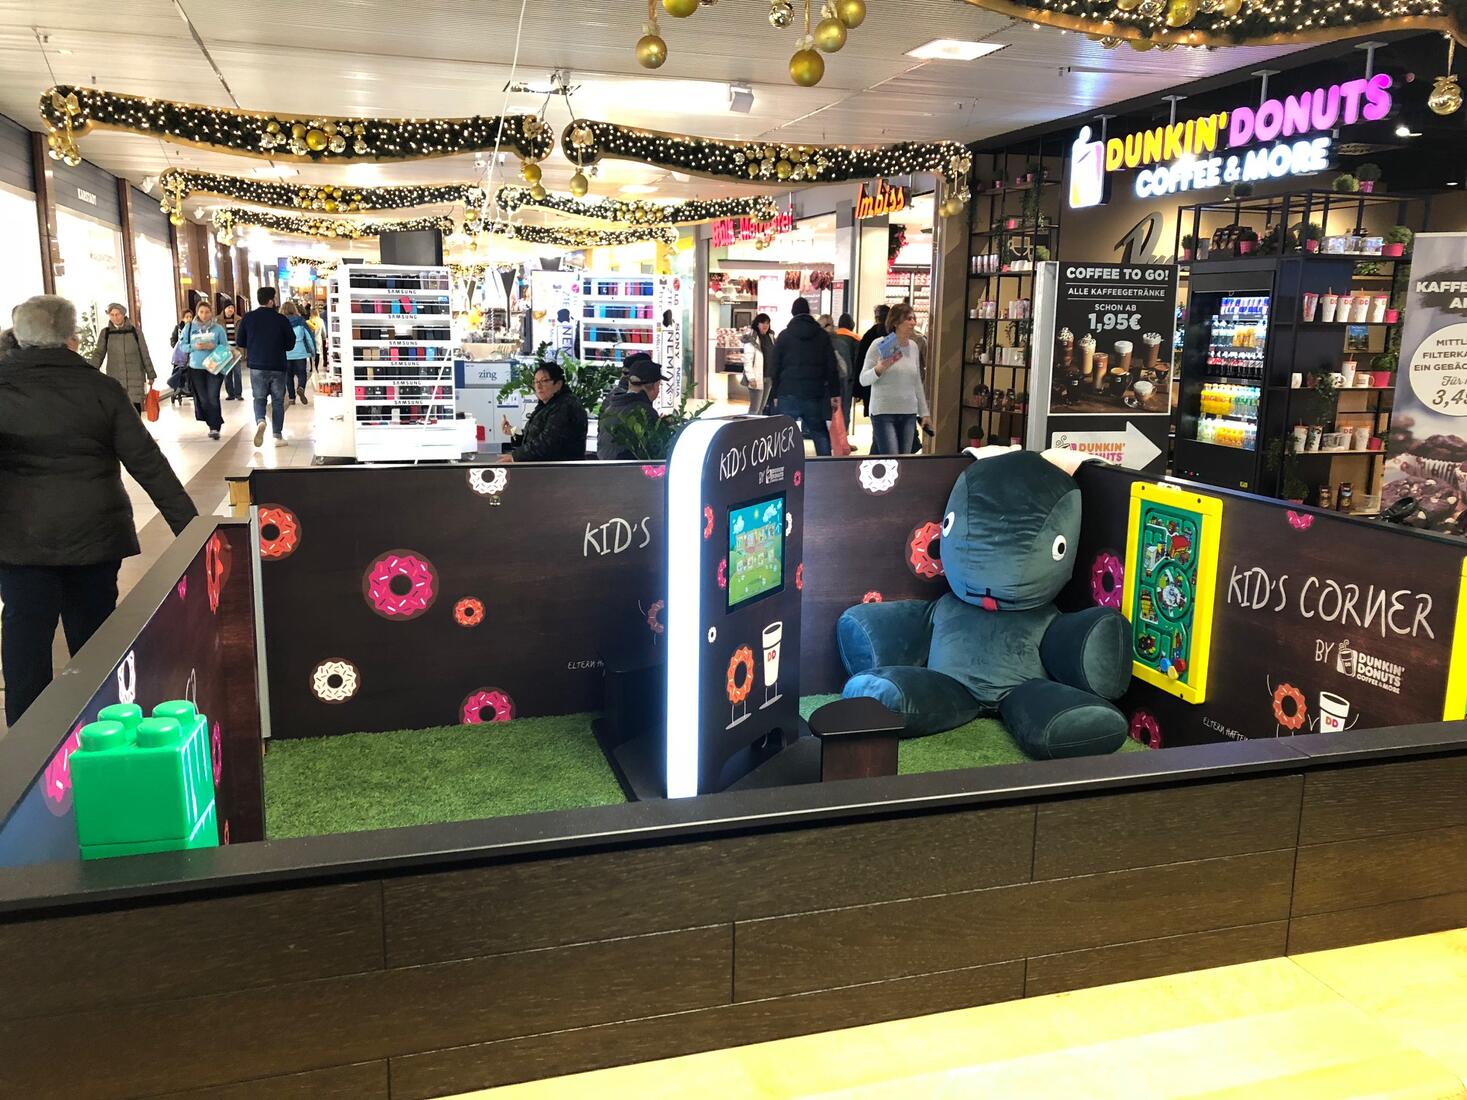 MyKidsCorner 2 x Touchscreen branded to @Dunkin Donuts Munich